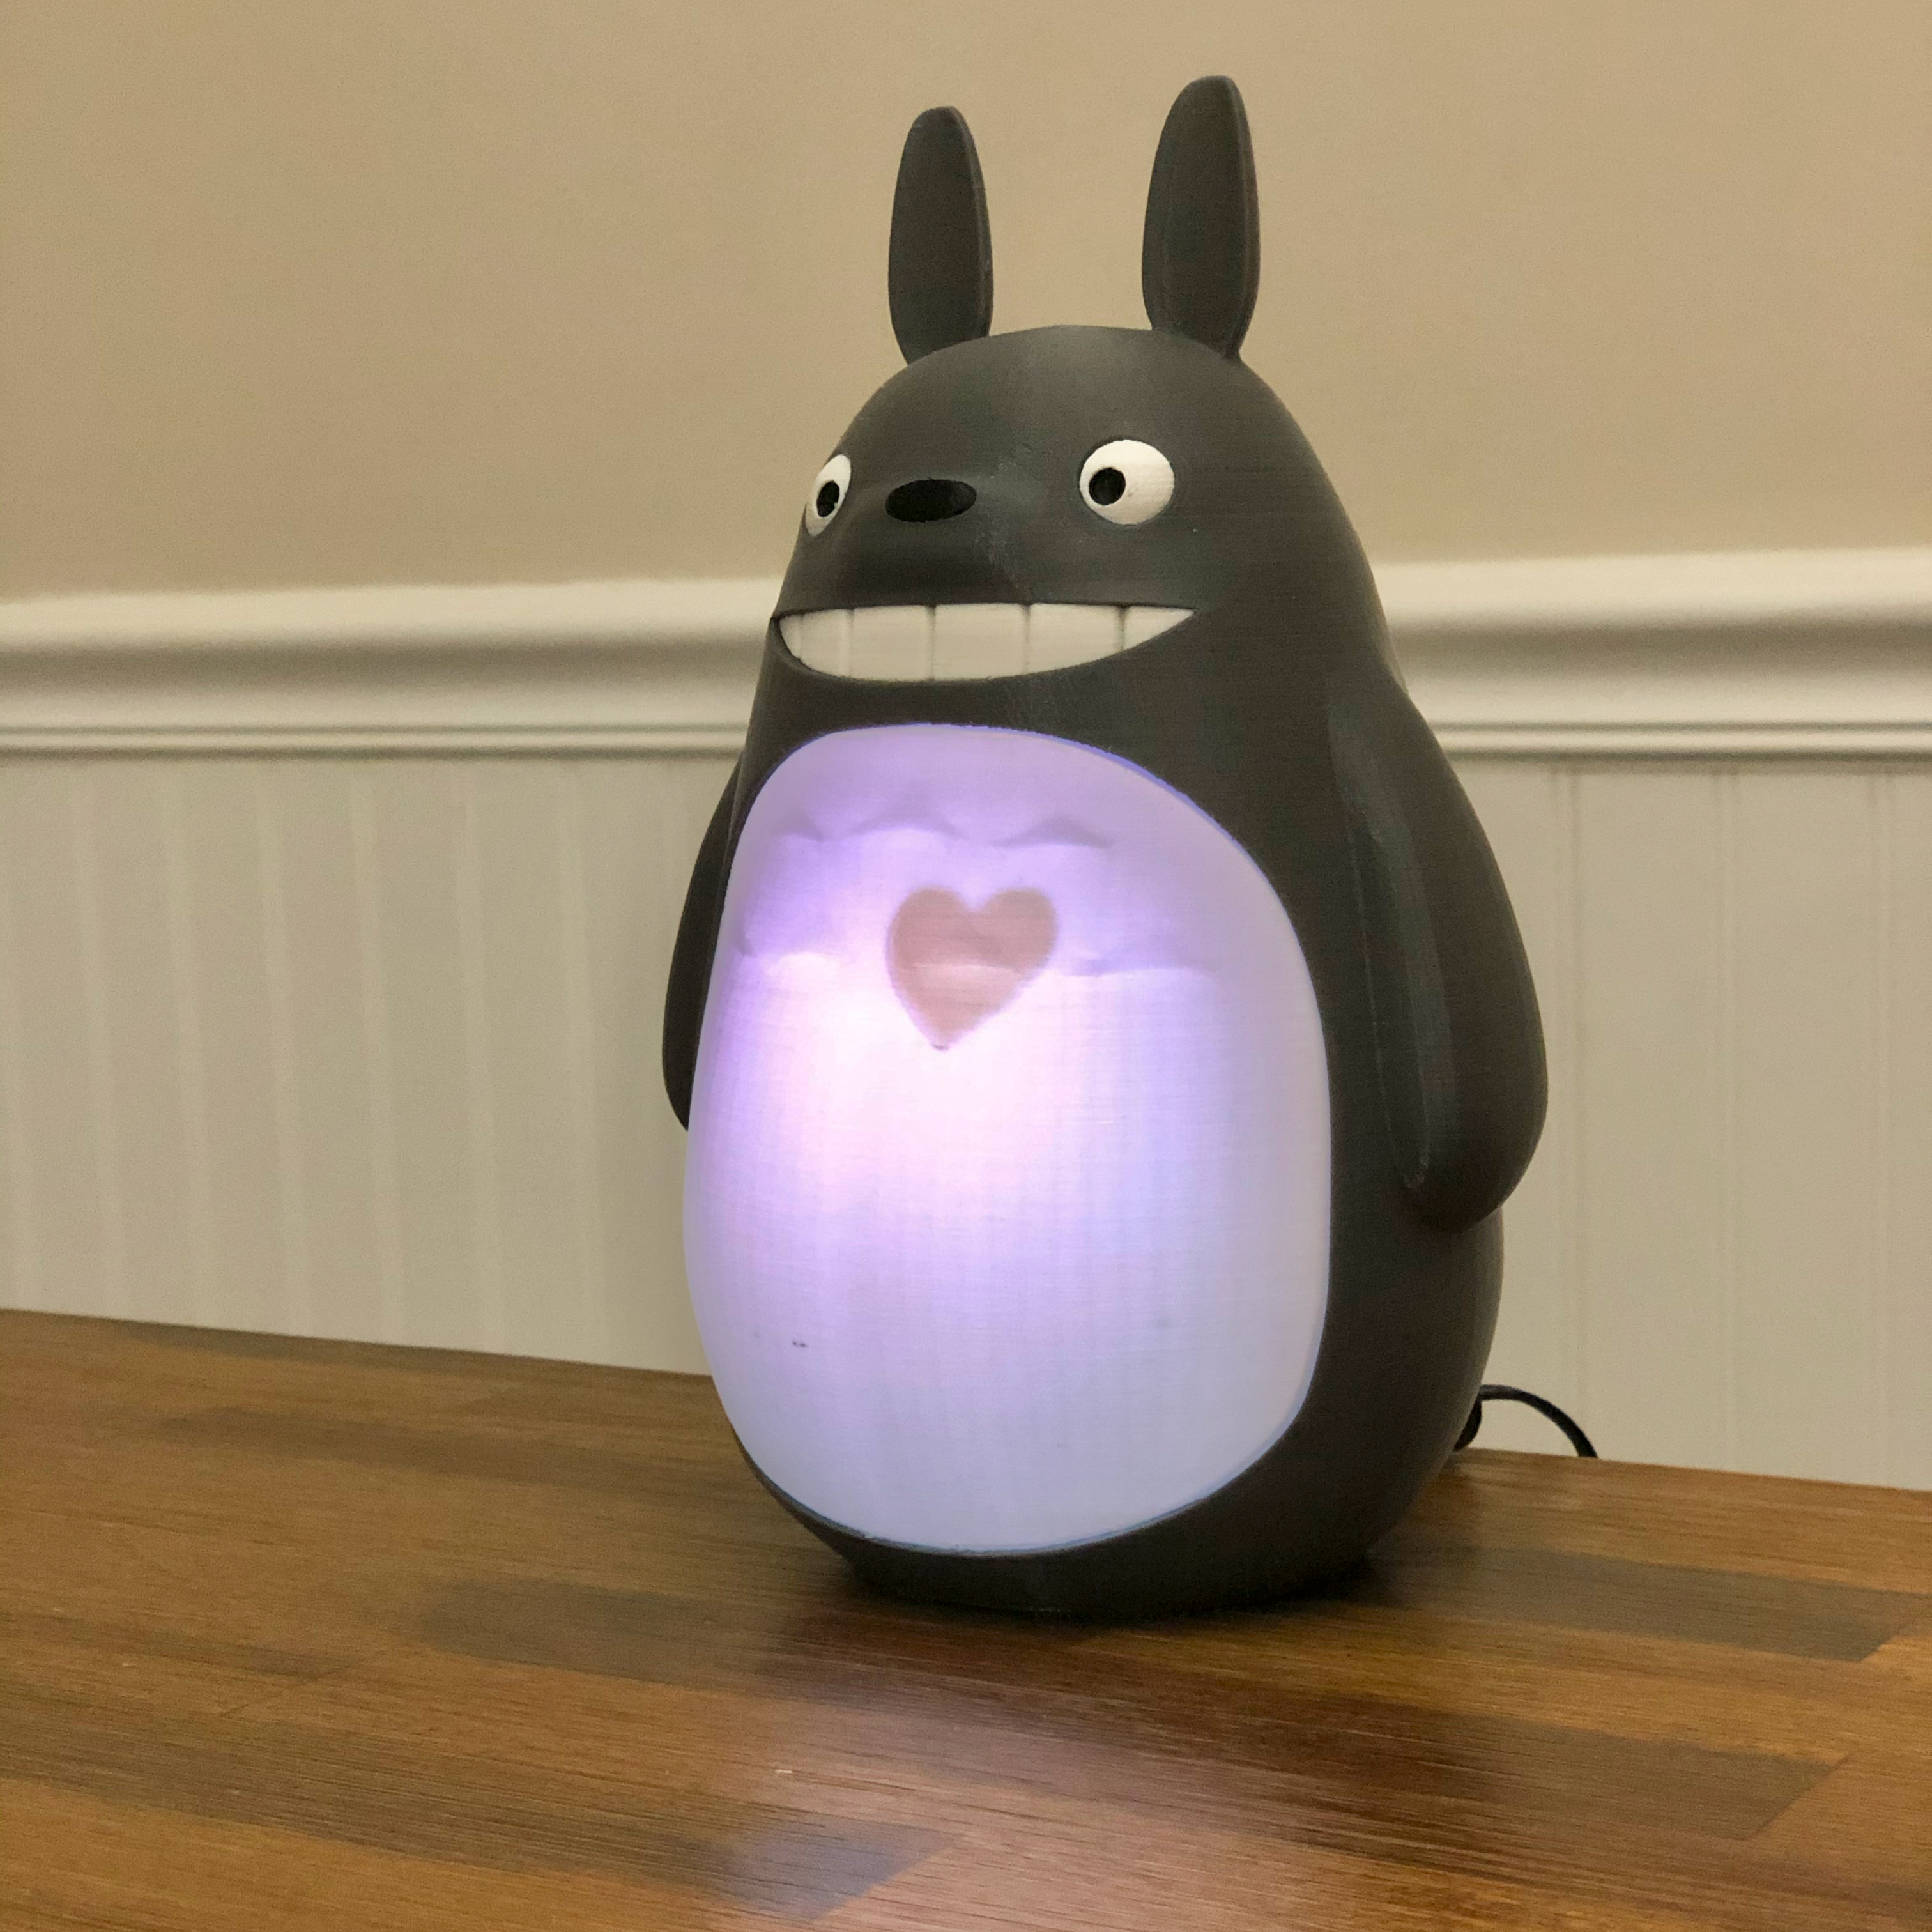 Totoro Lamp - Siri/HomeKit enabled!